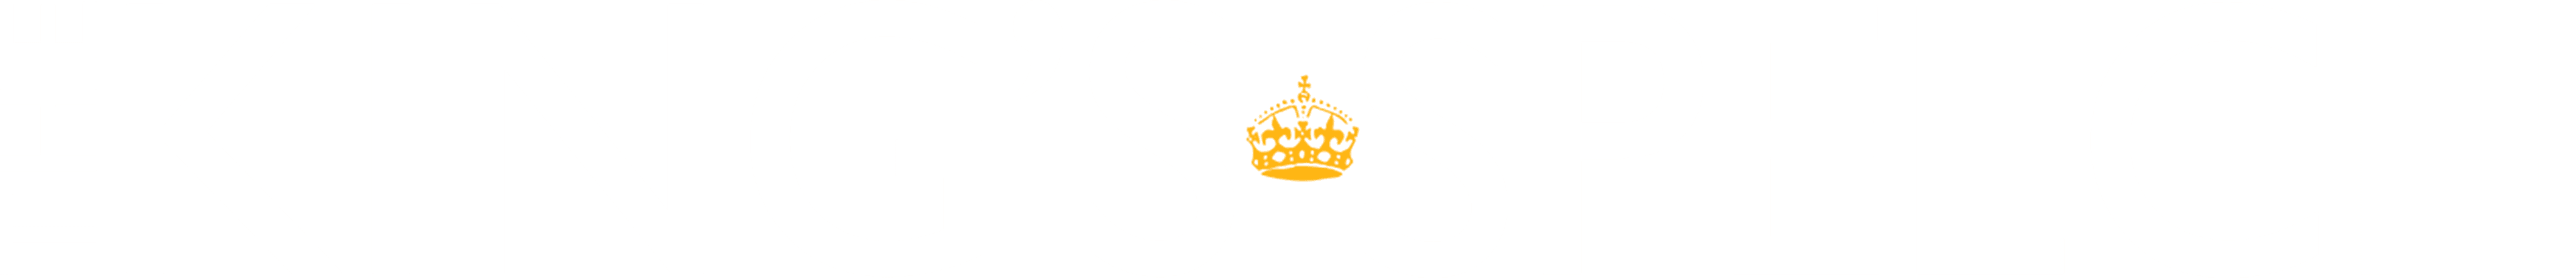 The King's Speech logo